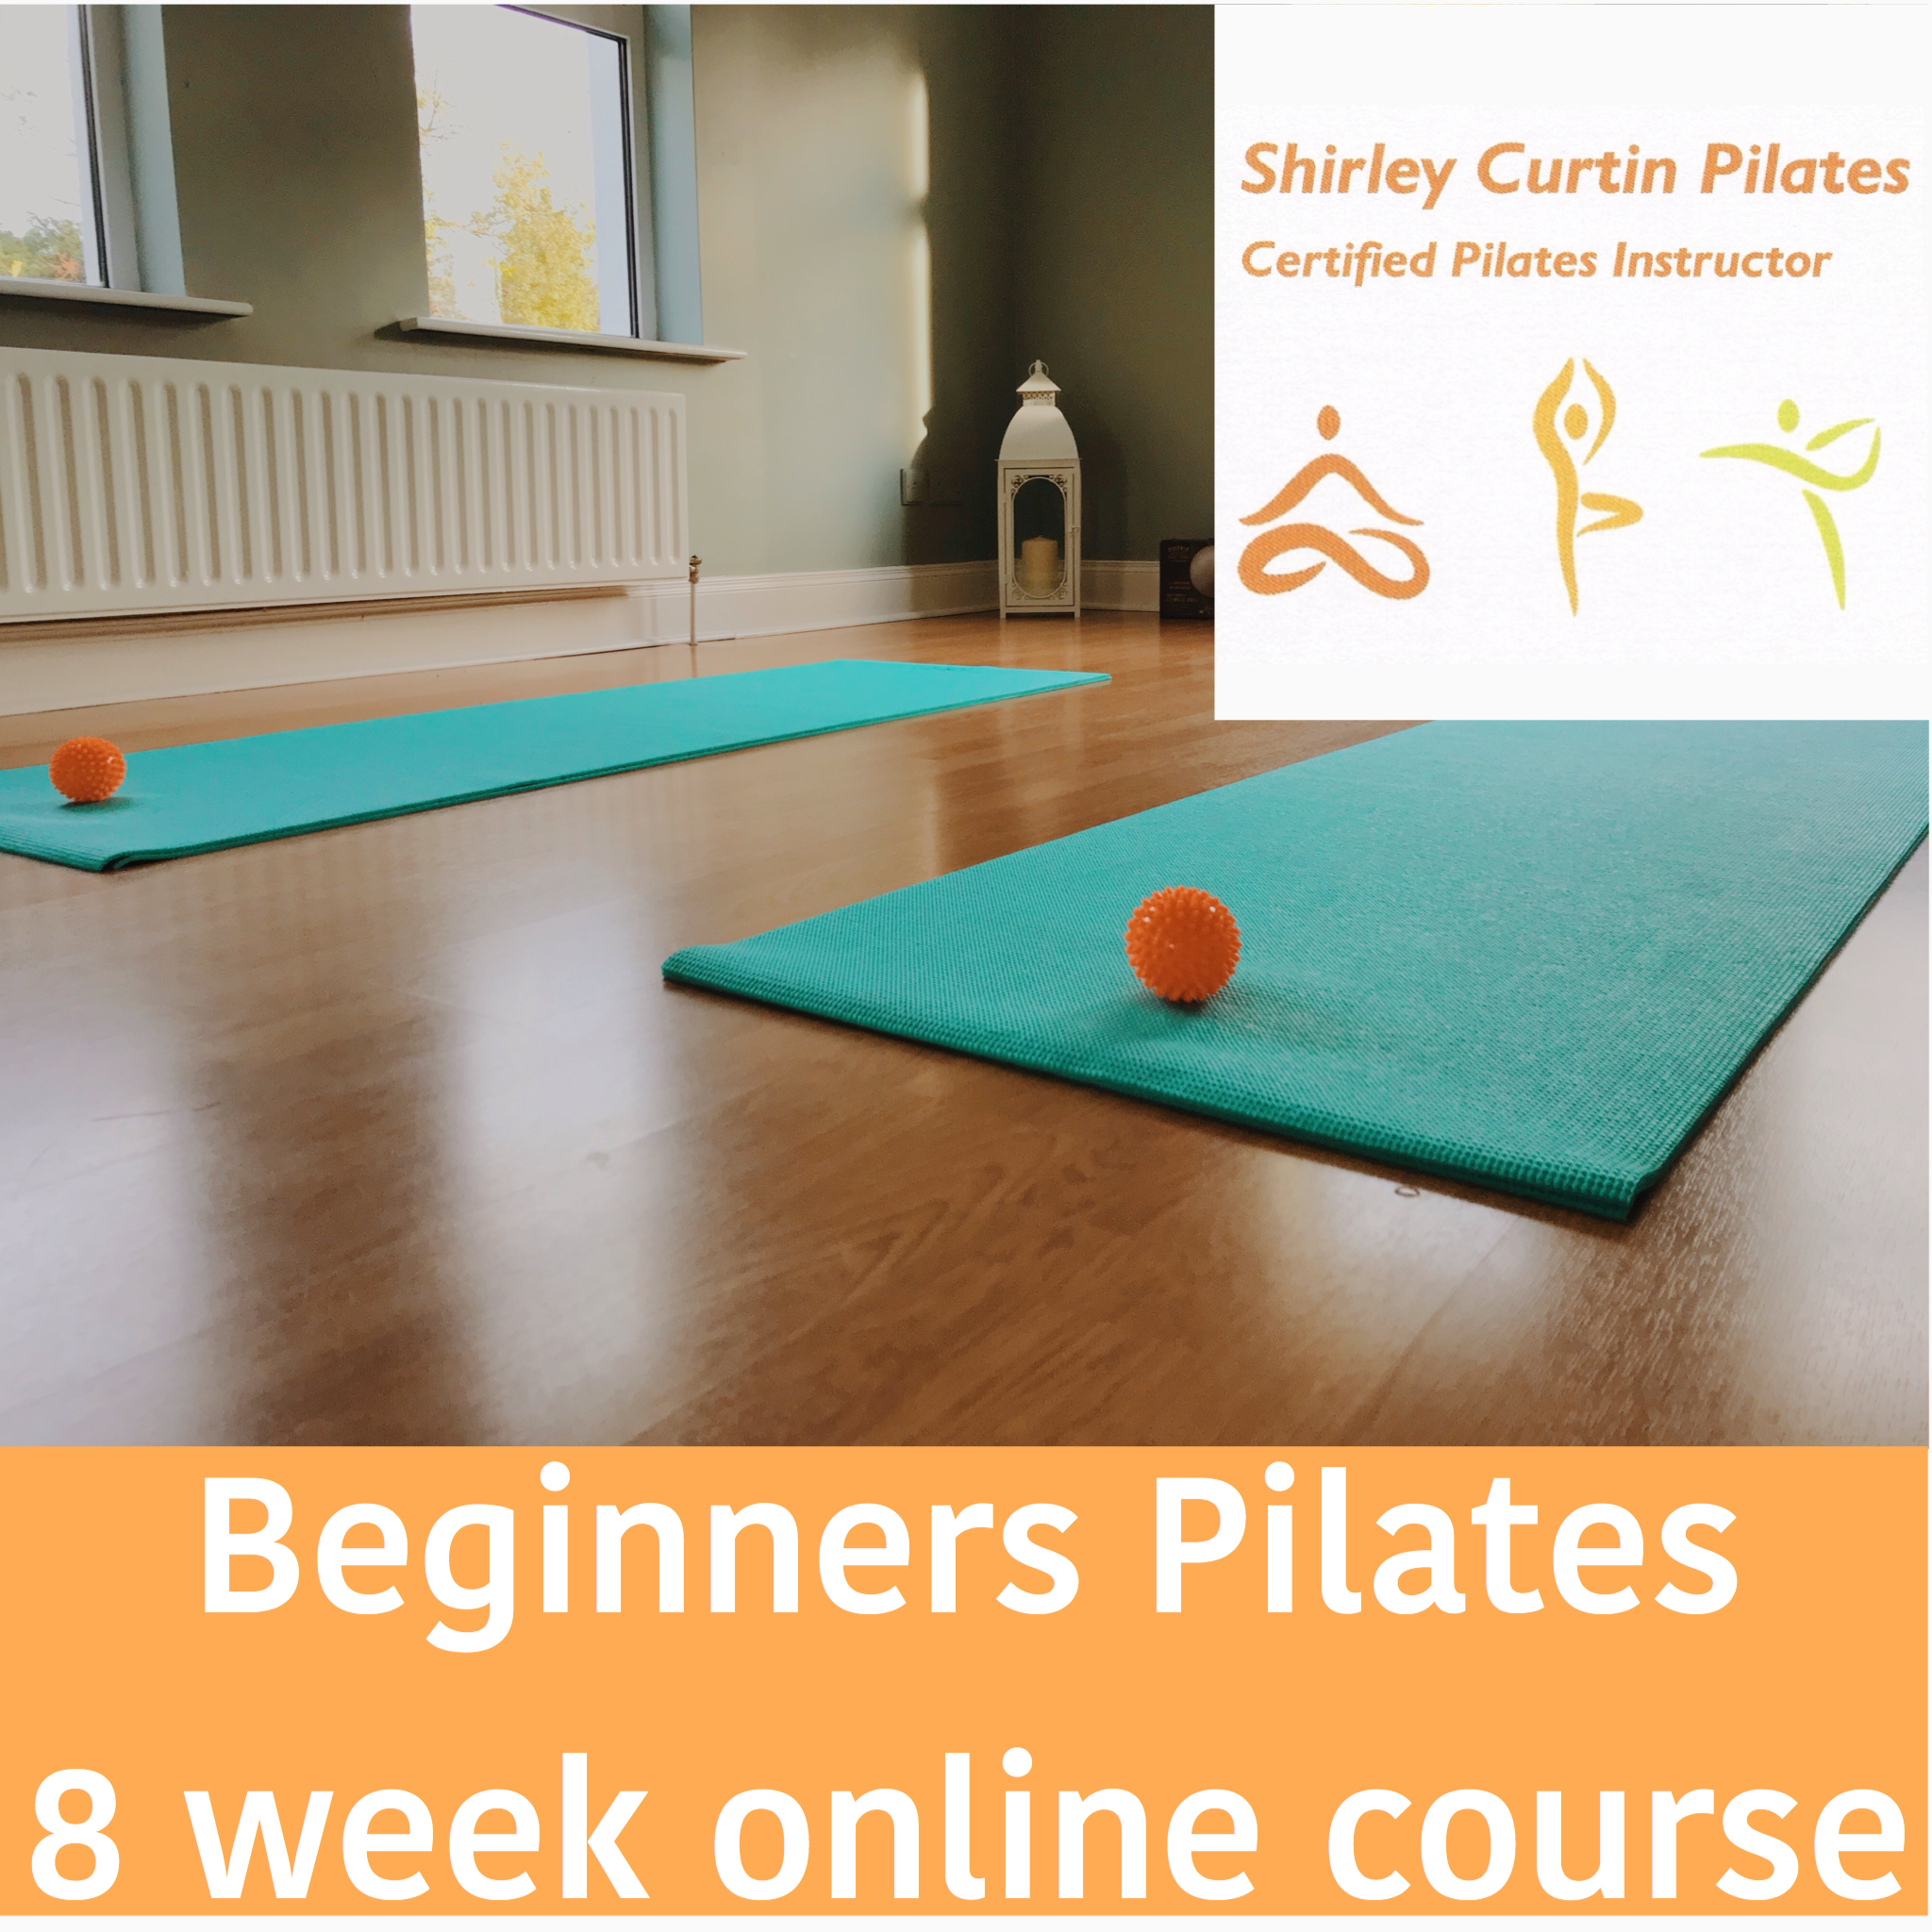 Beginners Pilates: 8 week online course.